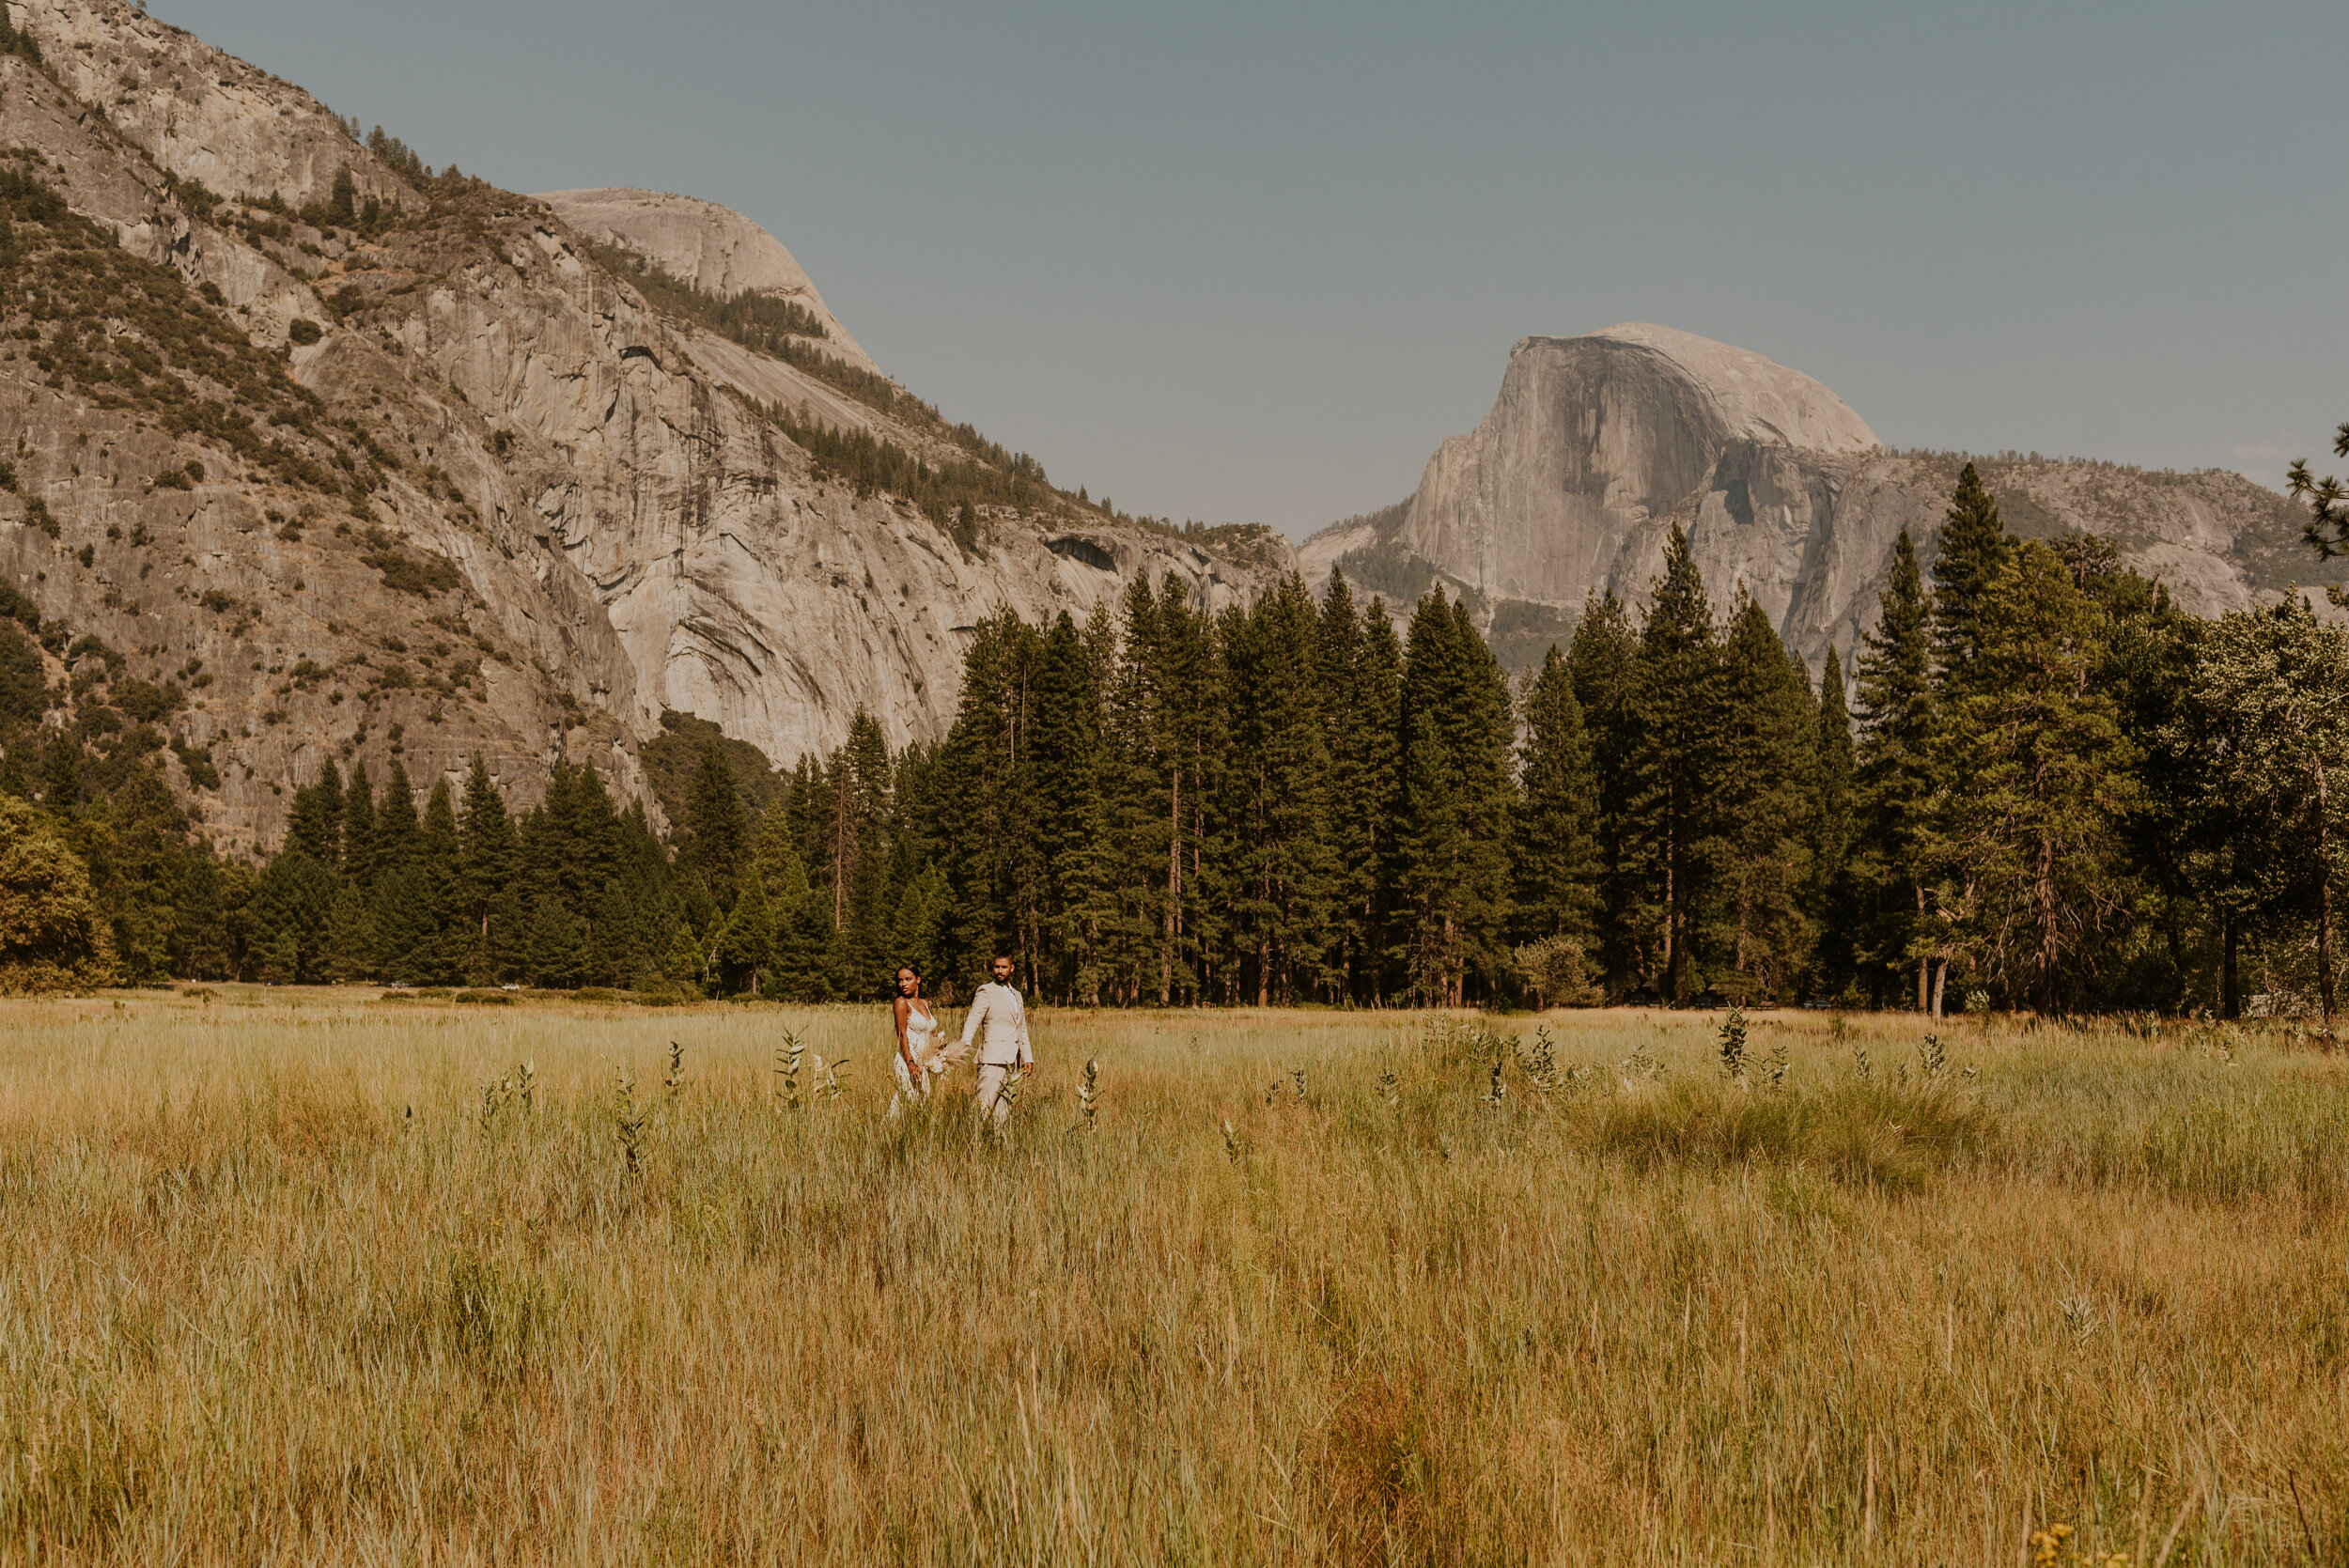 How to Elope in Yosemite National Park | Yosemite Elopement Photographer | Eloping in Yosemite | Yosemite Wedding Photography | Adventure Elopement | Elopement Planning